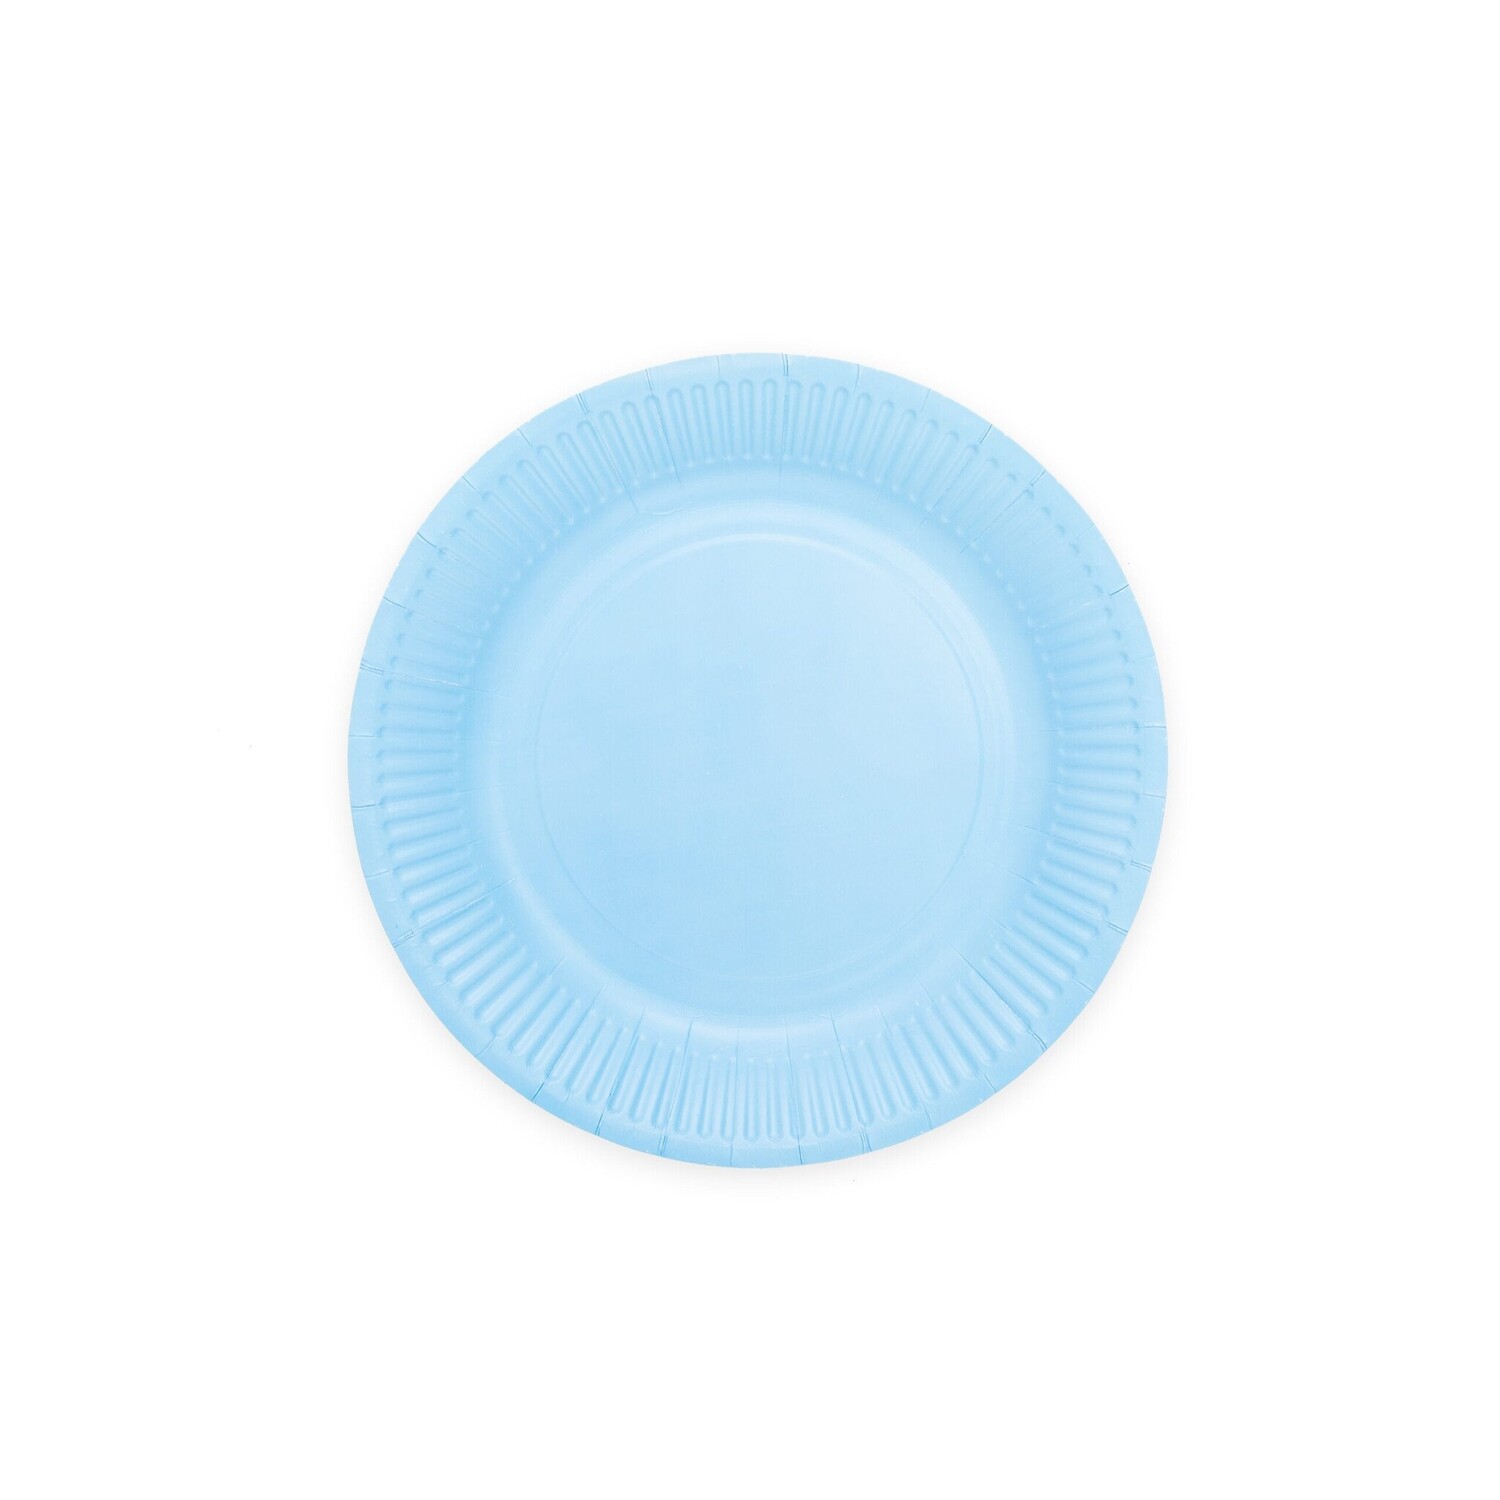 8 assiettes carton bleu clair